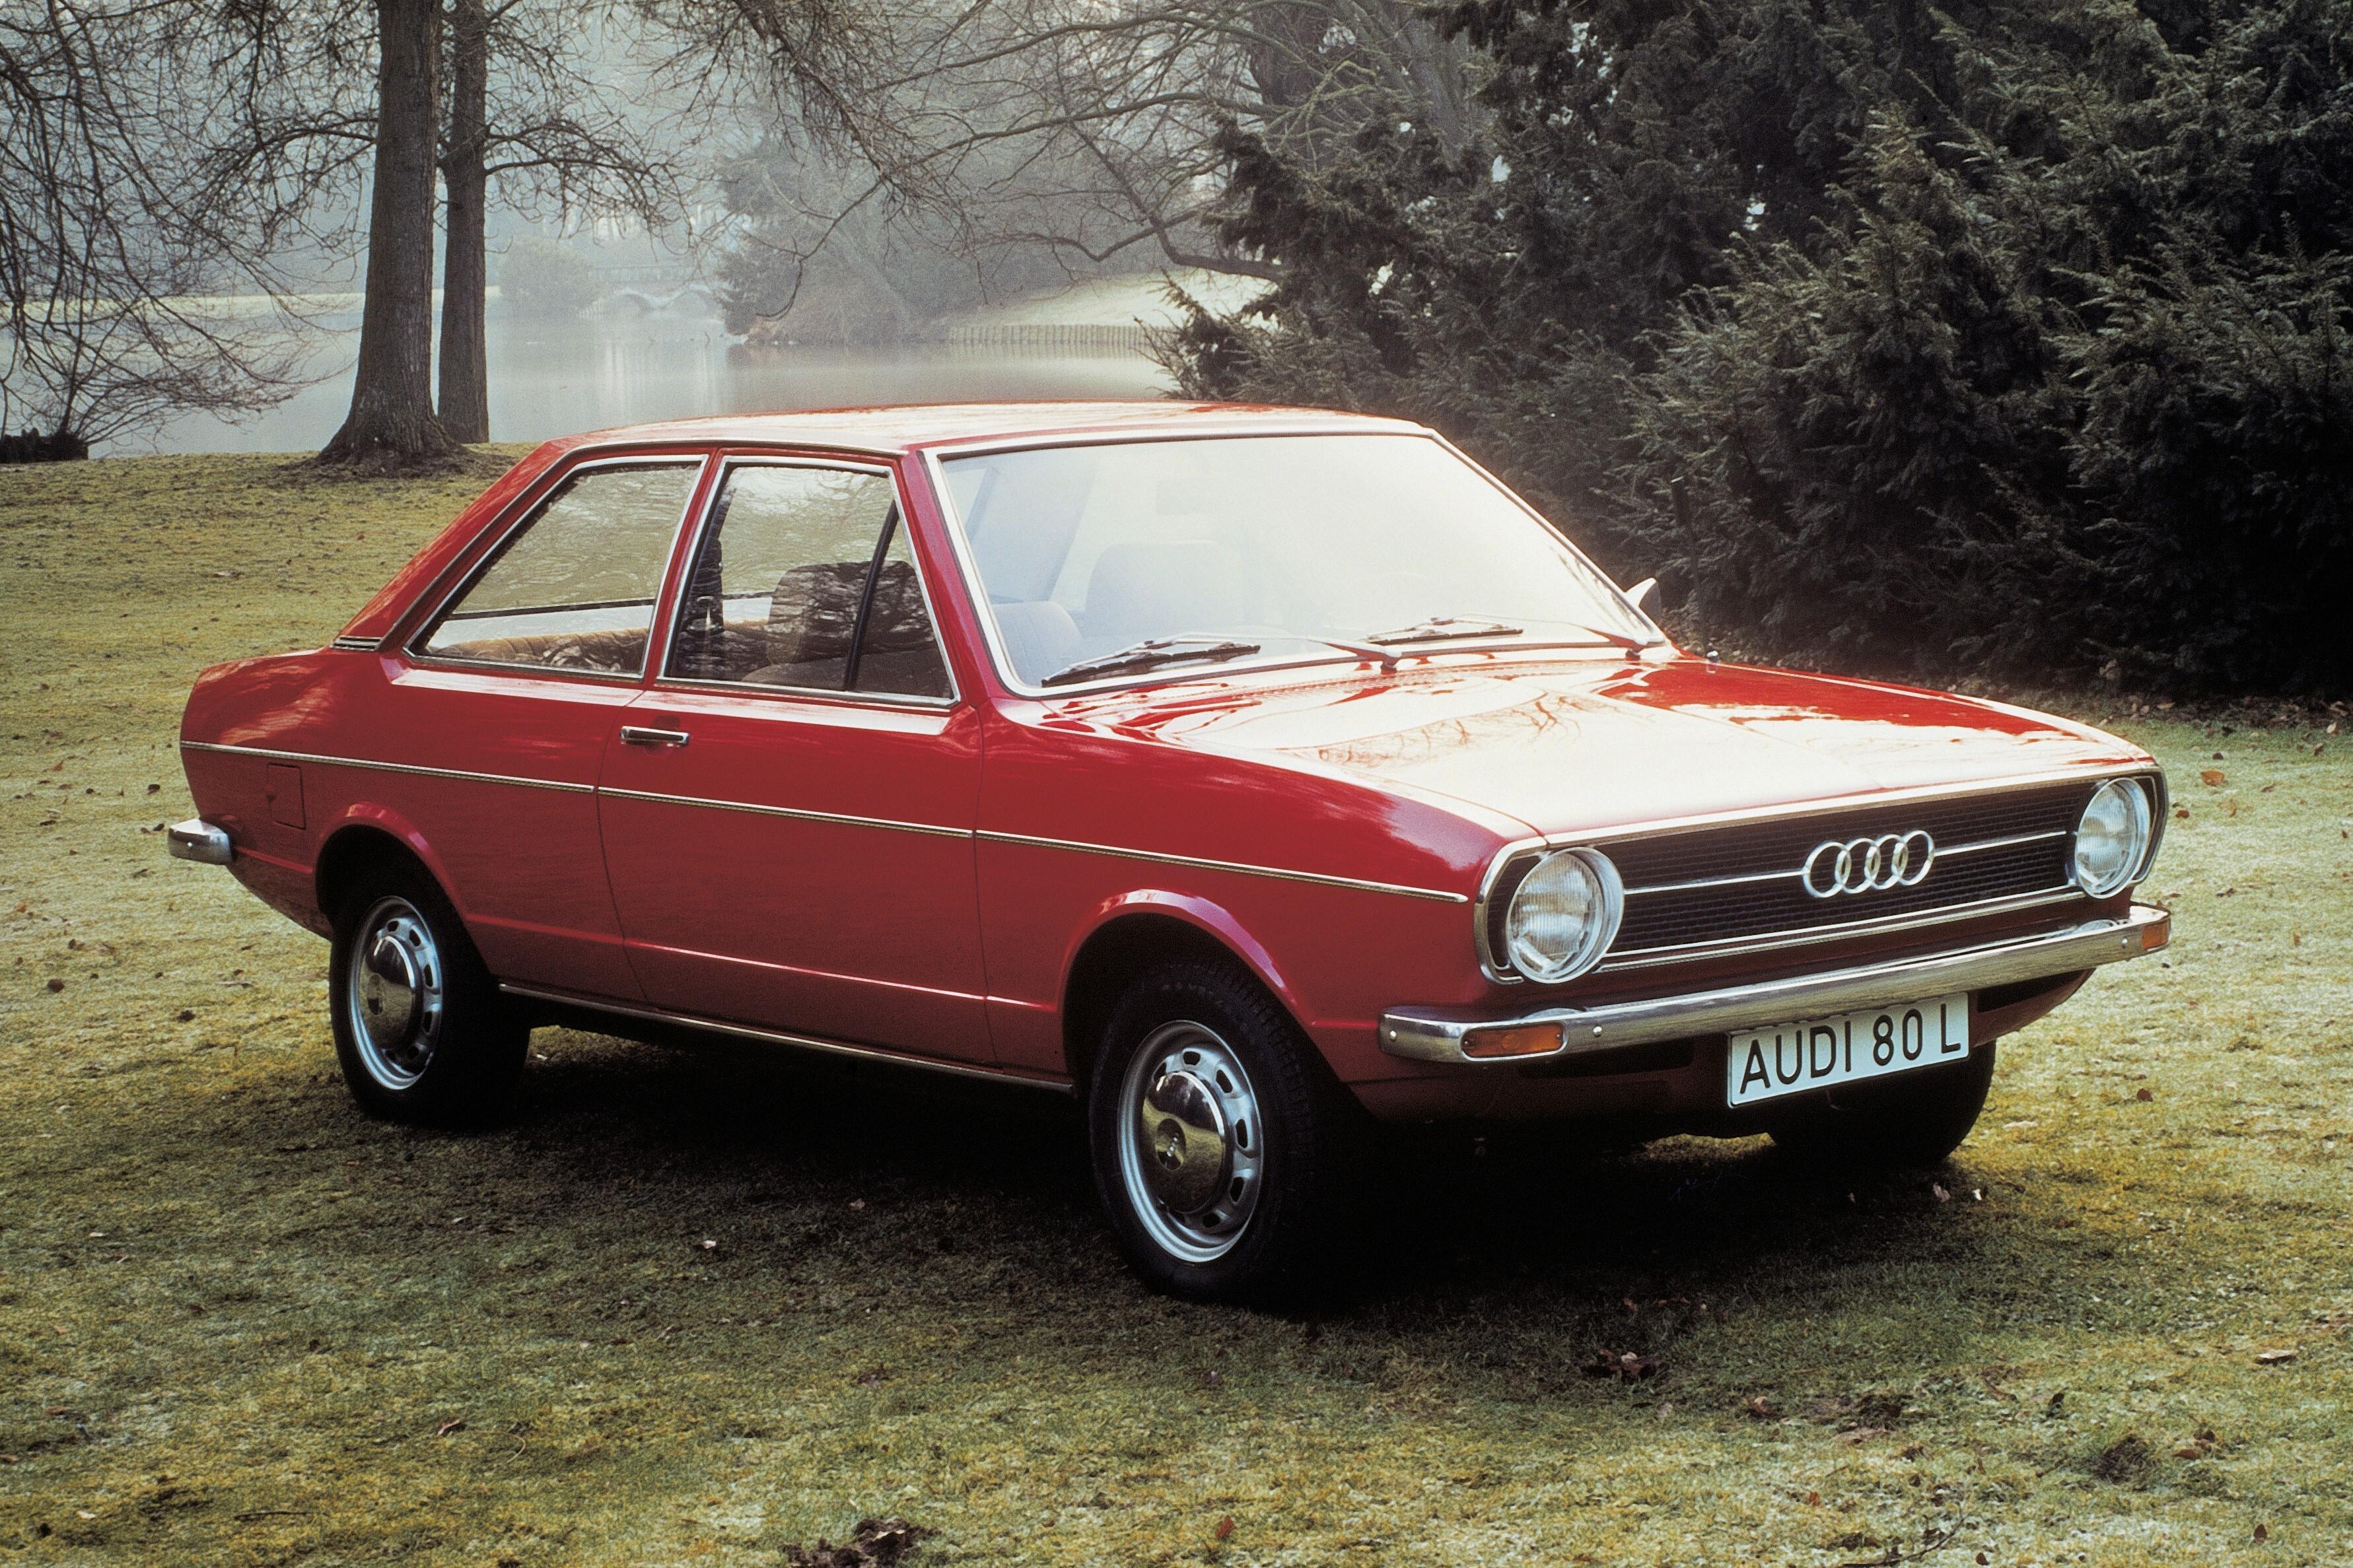 Б 80 01. Ауди 80 1 поколения. Audi 80 b1. Ауди 80 б1. Ауди 80 1973.